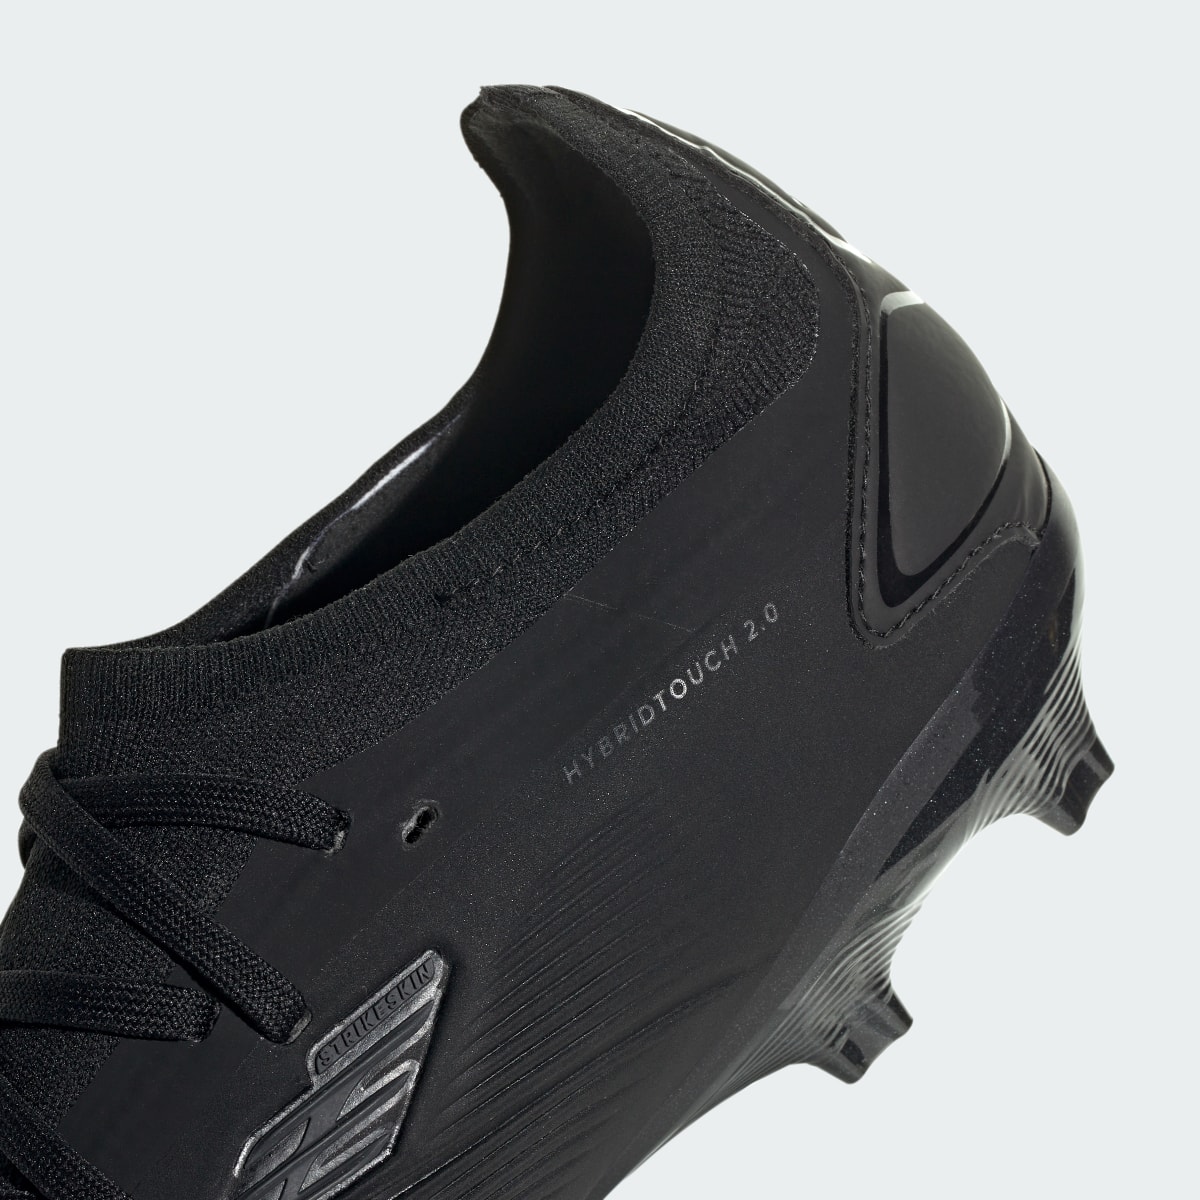 Adidas Predator 24 Pro Firm Ground Boots. 10